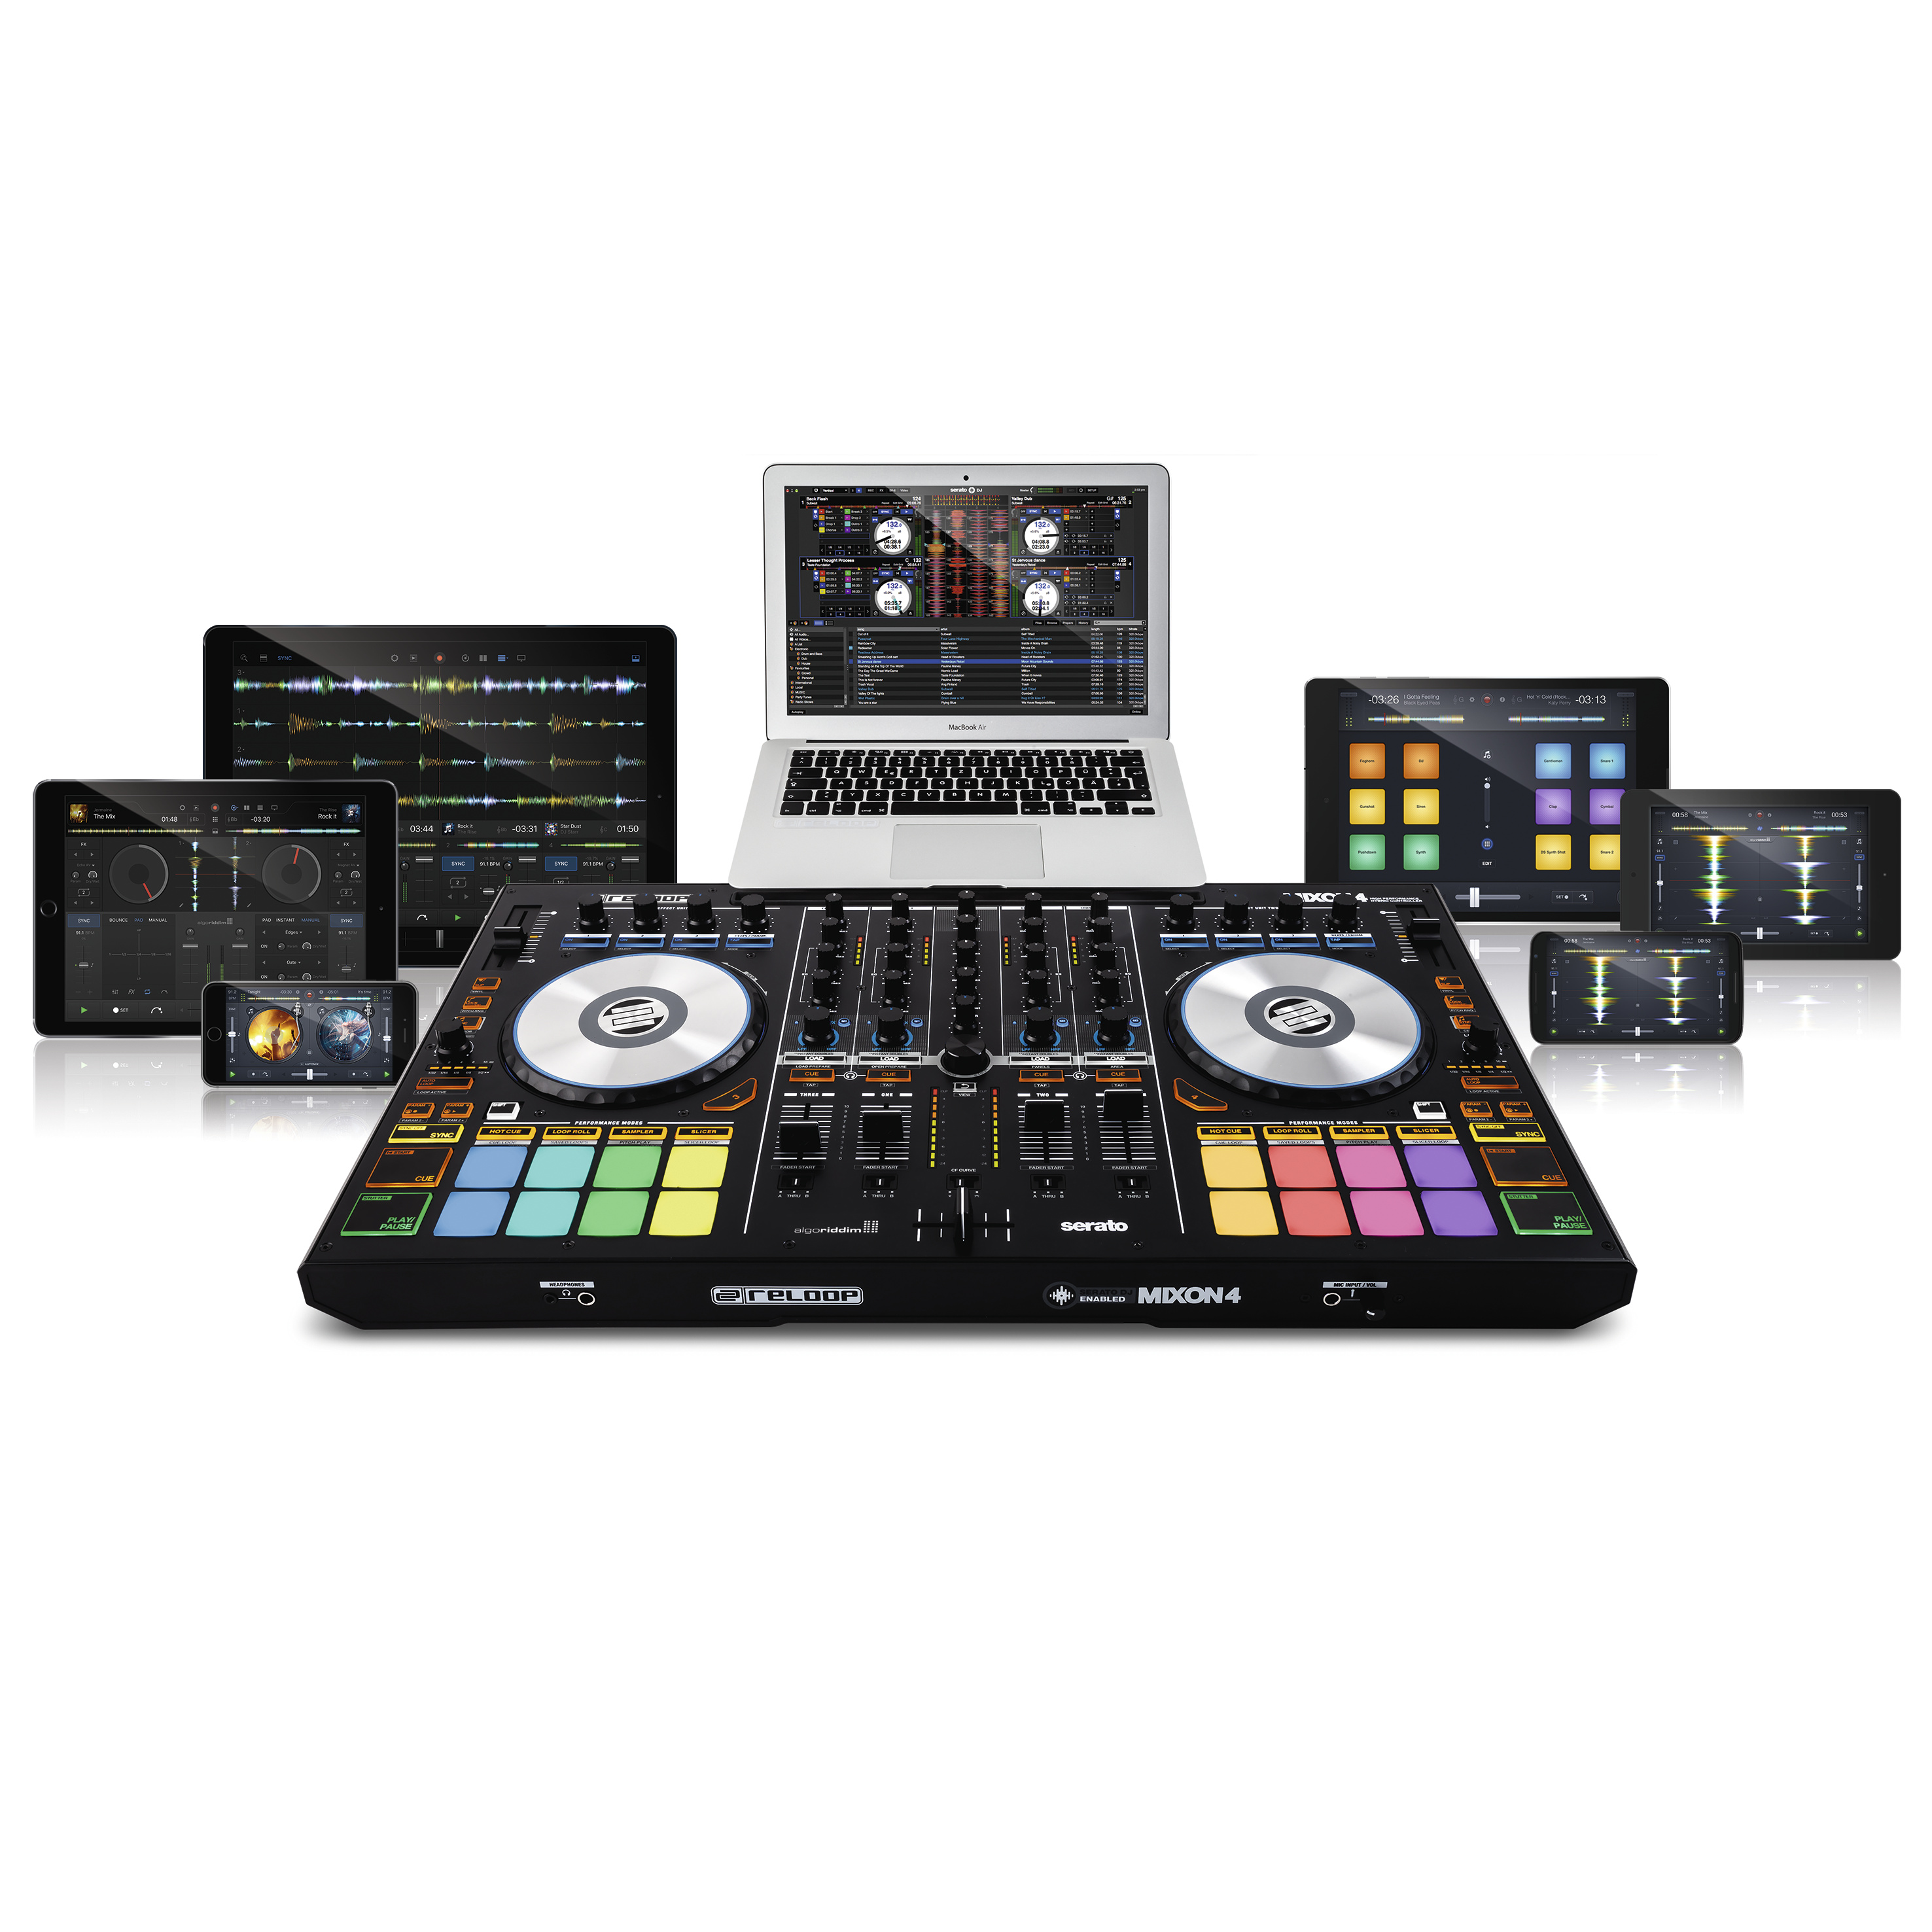 Reloop Premium Case for Mixon 4 DJ Controller